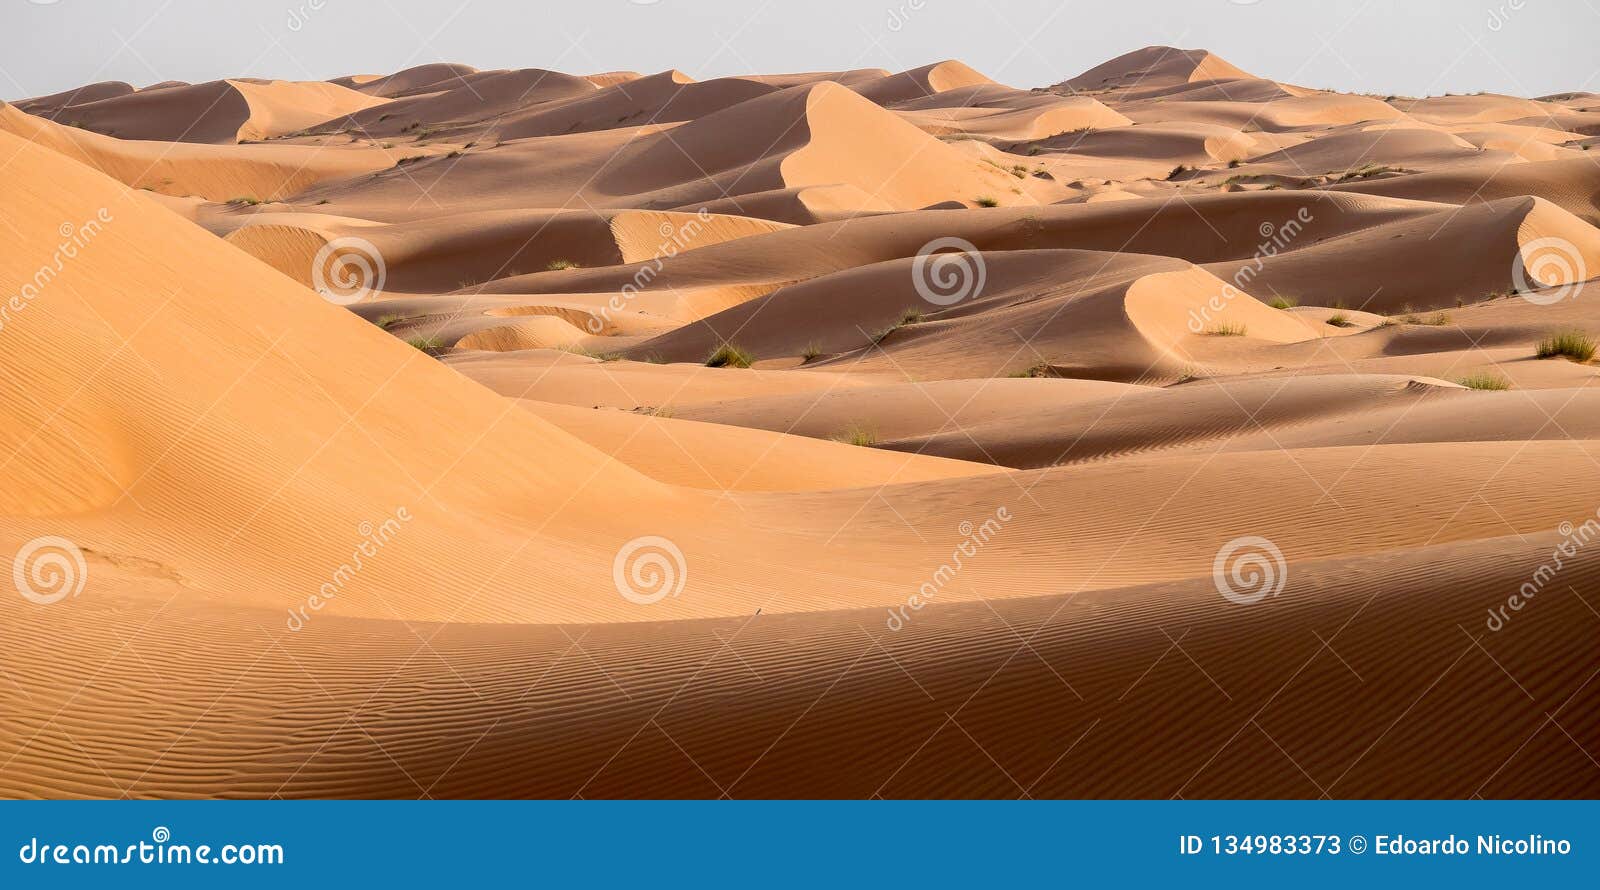 wahiba sands, oman desert, at sunset